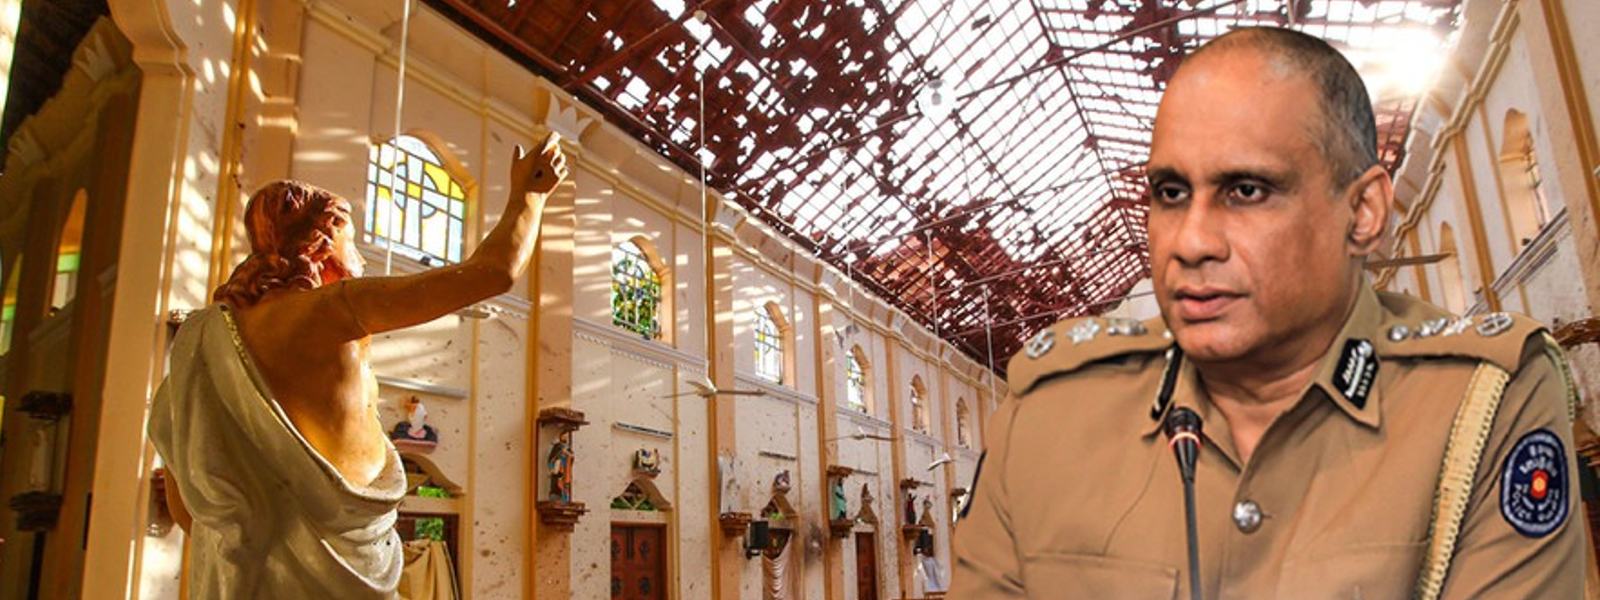 Sri Lanka’s Police Chief in court to provide evidence in Easter Attacks case